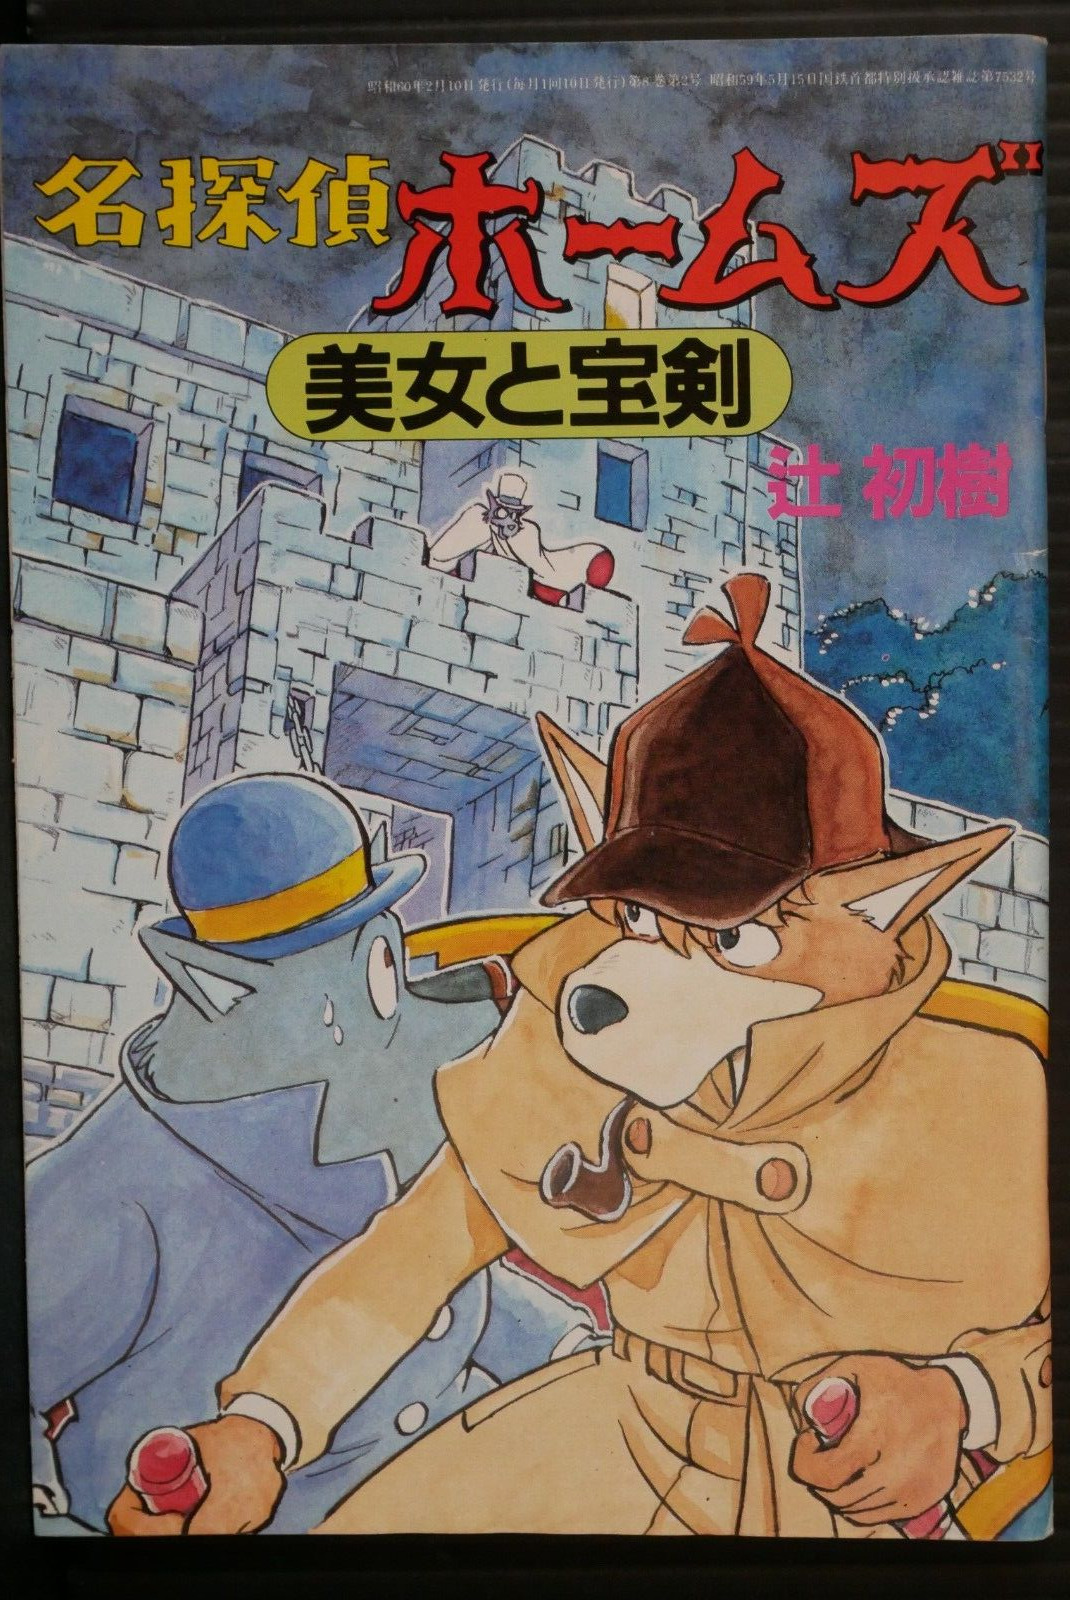 Sherlock Hound - Bijo to Houken (Manga Booklet) by Hatsuki Tsuji - from JAPAN